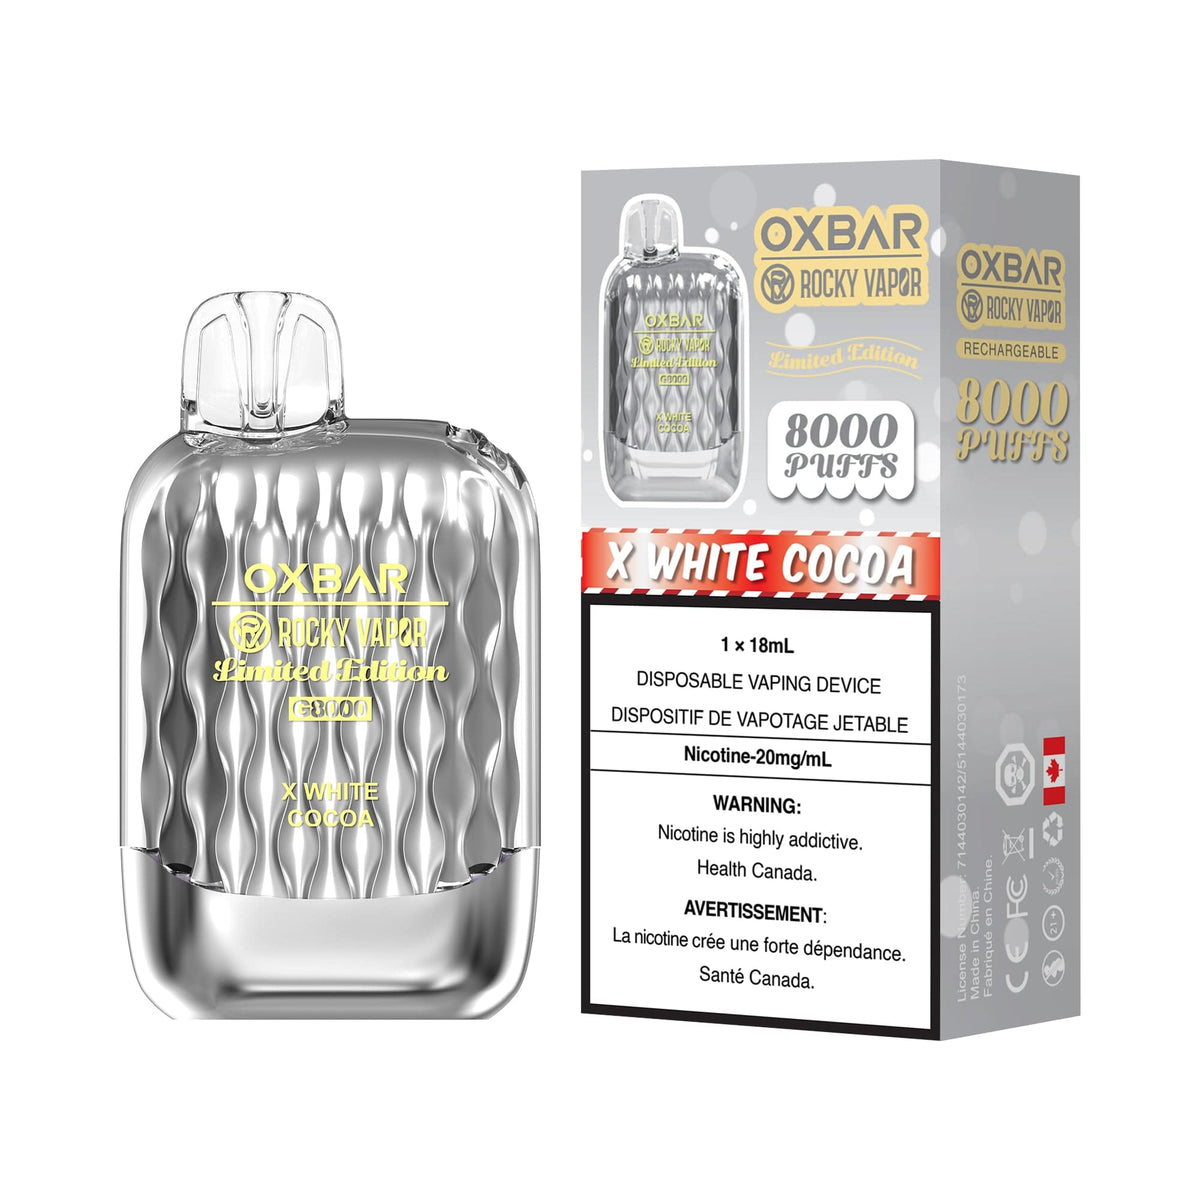 OXBAR x Rocky Vapor G8000 - X White Cocoa Disposable Vape available on Canada online vape shop